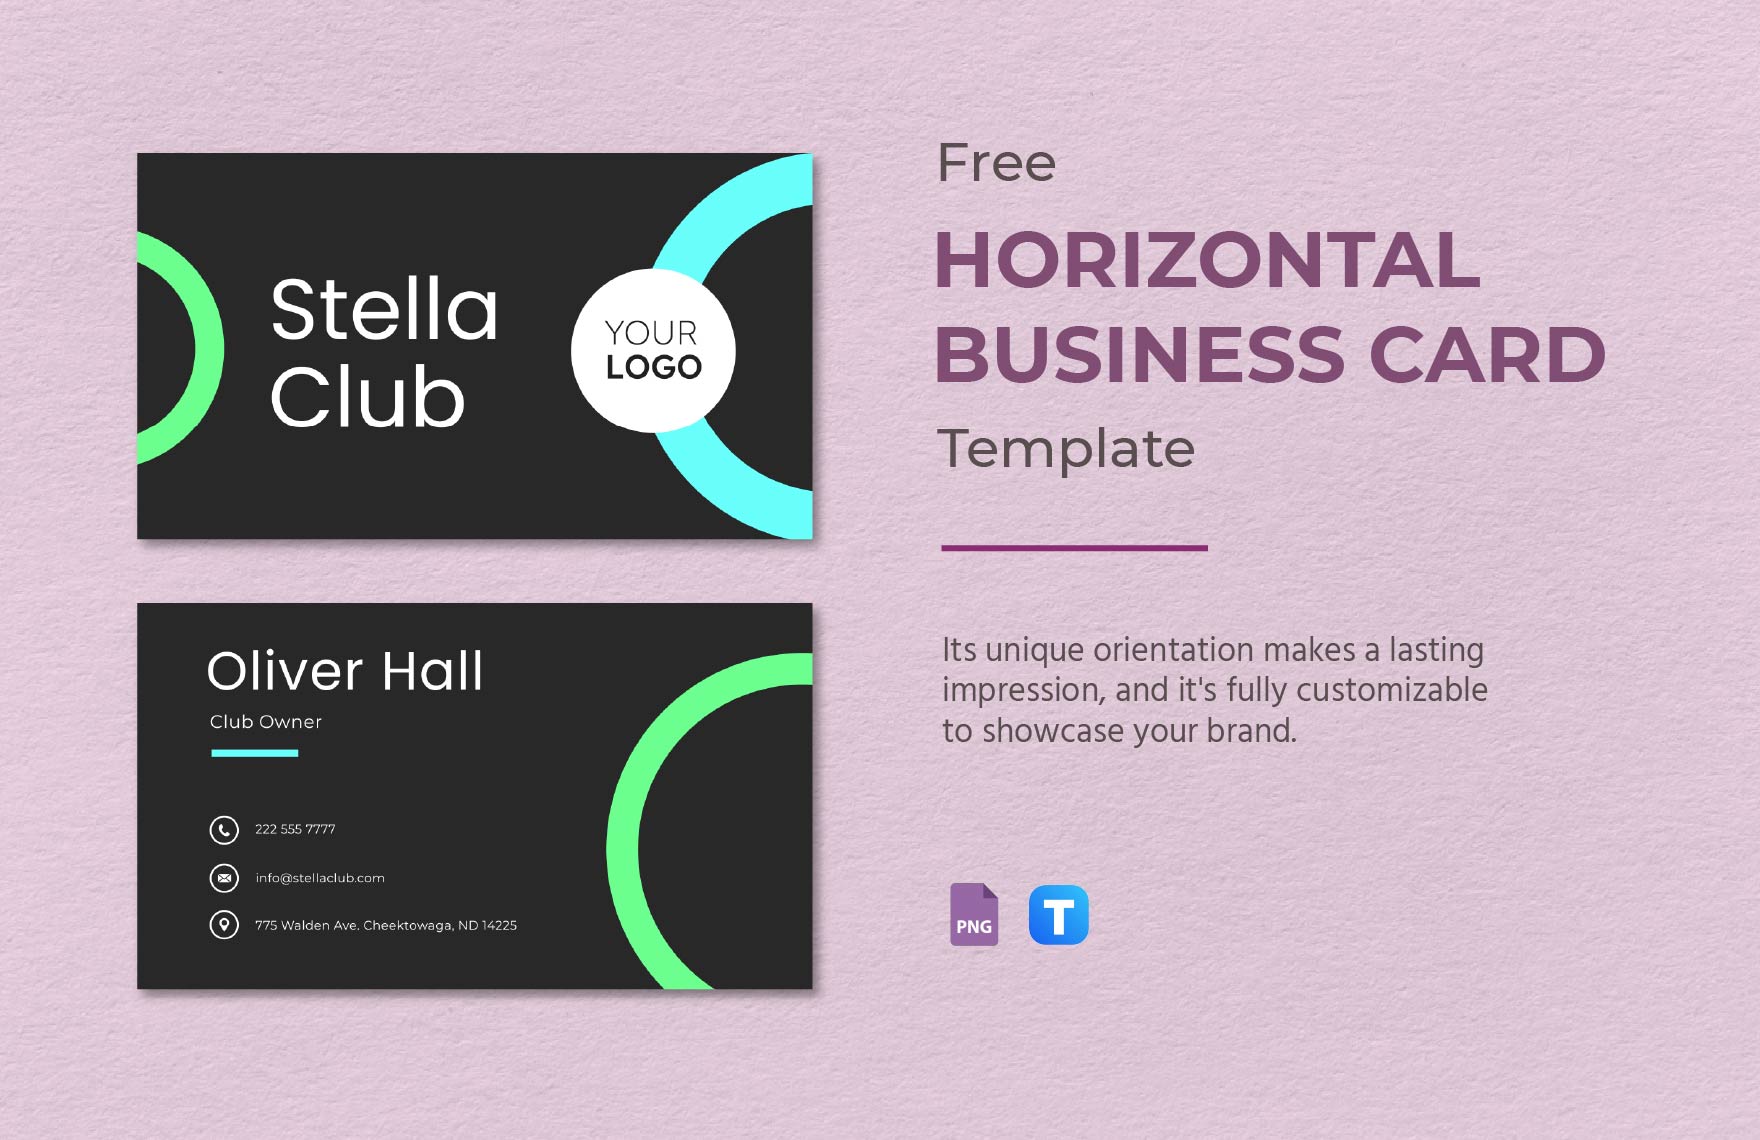 Free Horizontal Business Card Template